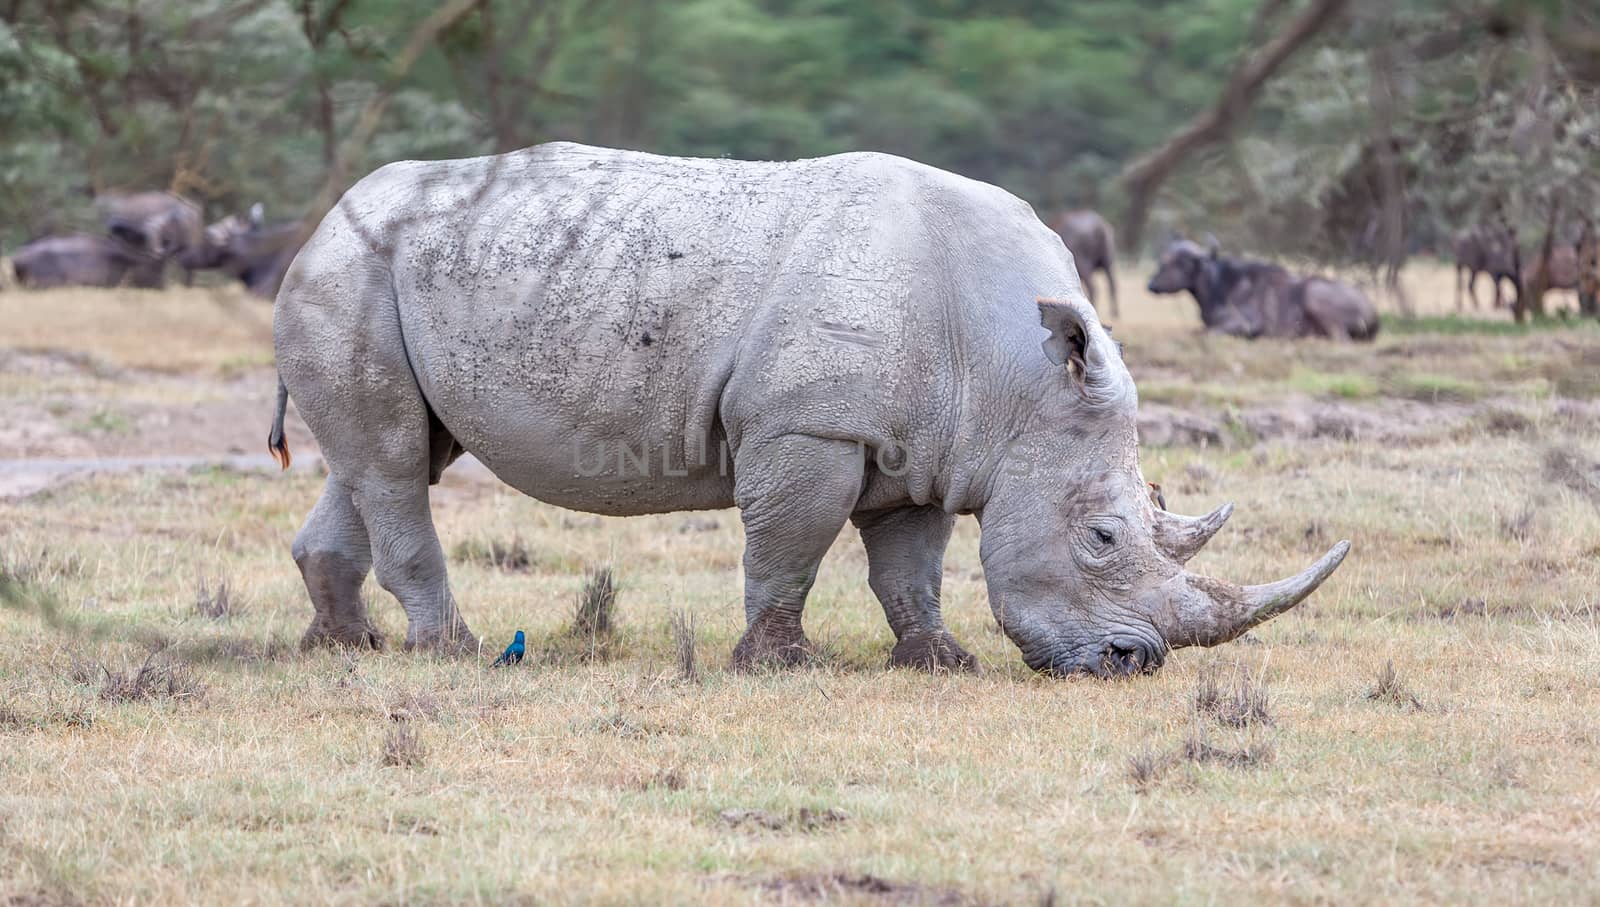 Safari - rhino by master1305